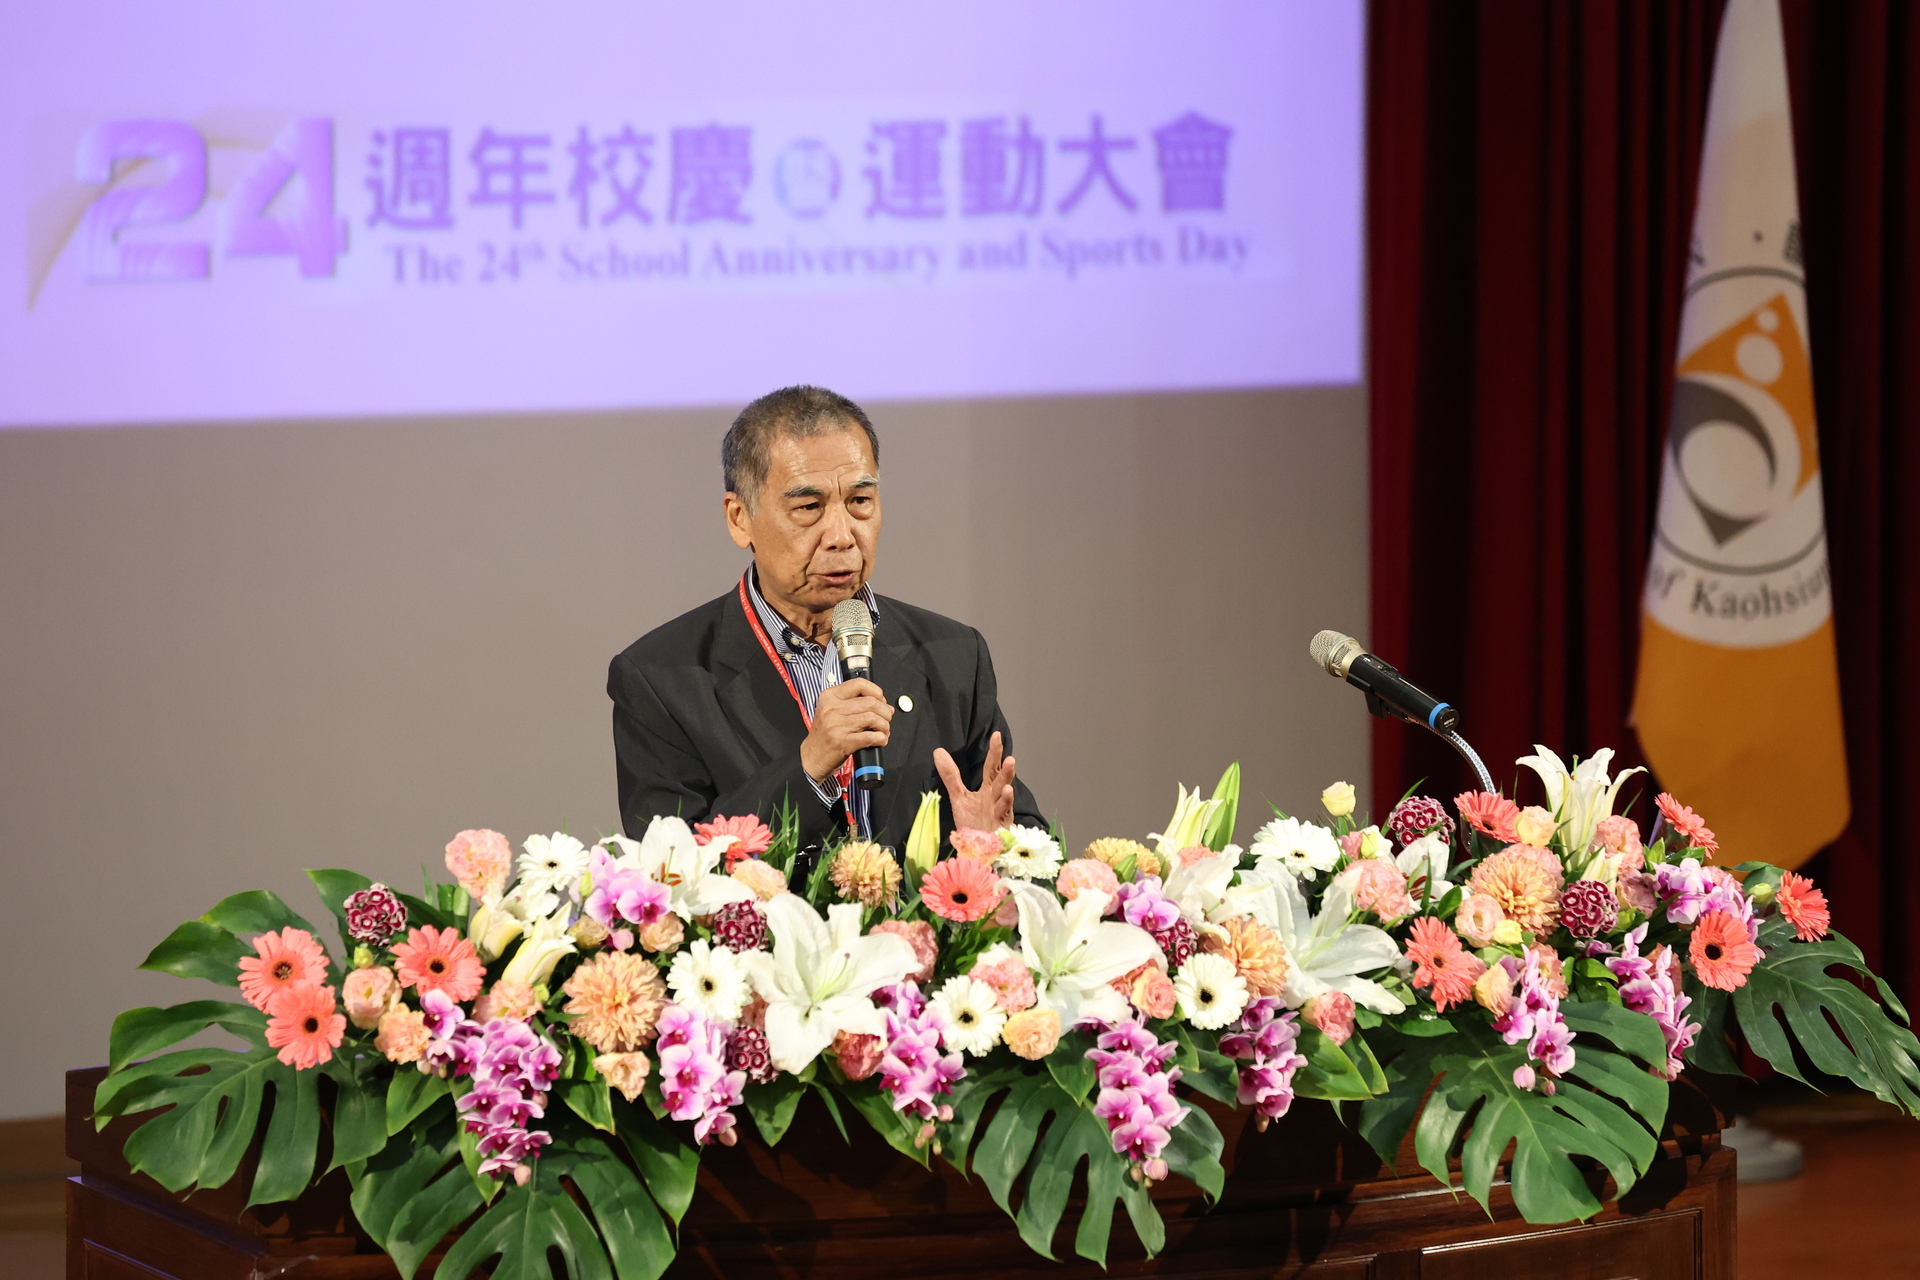 Speech by Chairman Lee Shun-chin of CPC Corporation 01